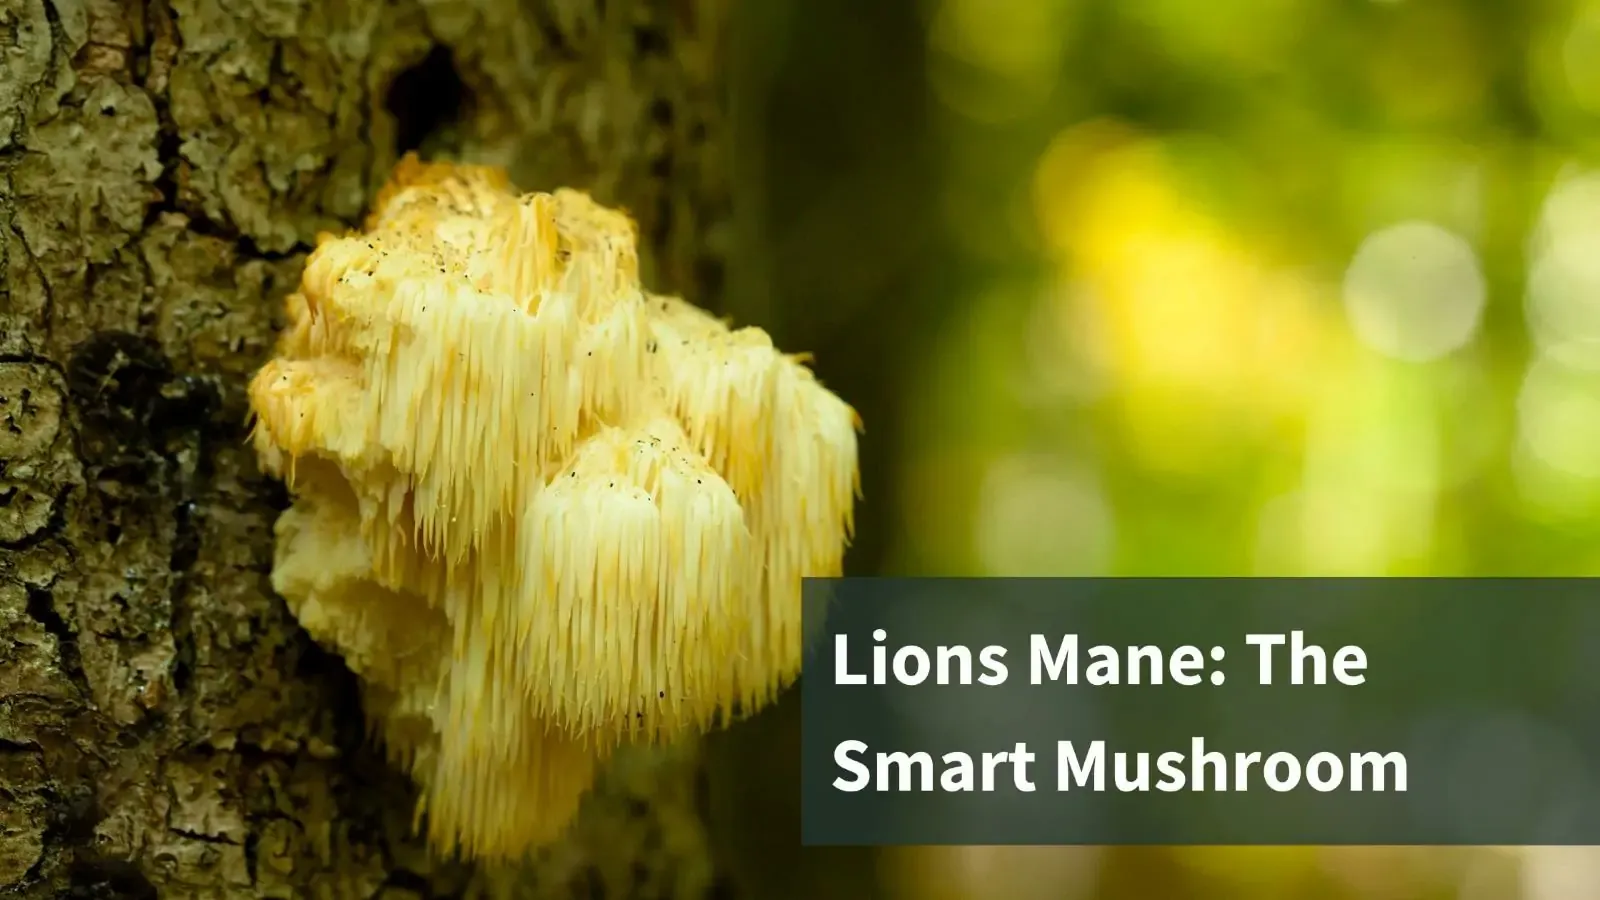 A Lion's Mane Mushroom growing on a tree. Text reads "Lions Mane: The Smart Mushroom"